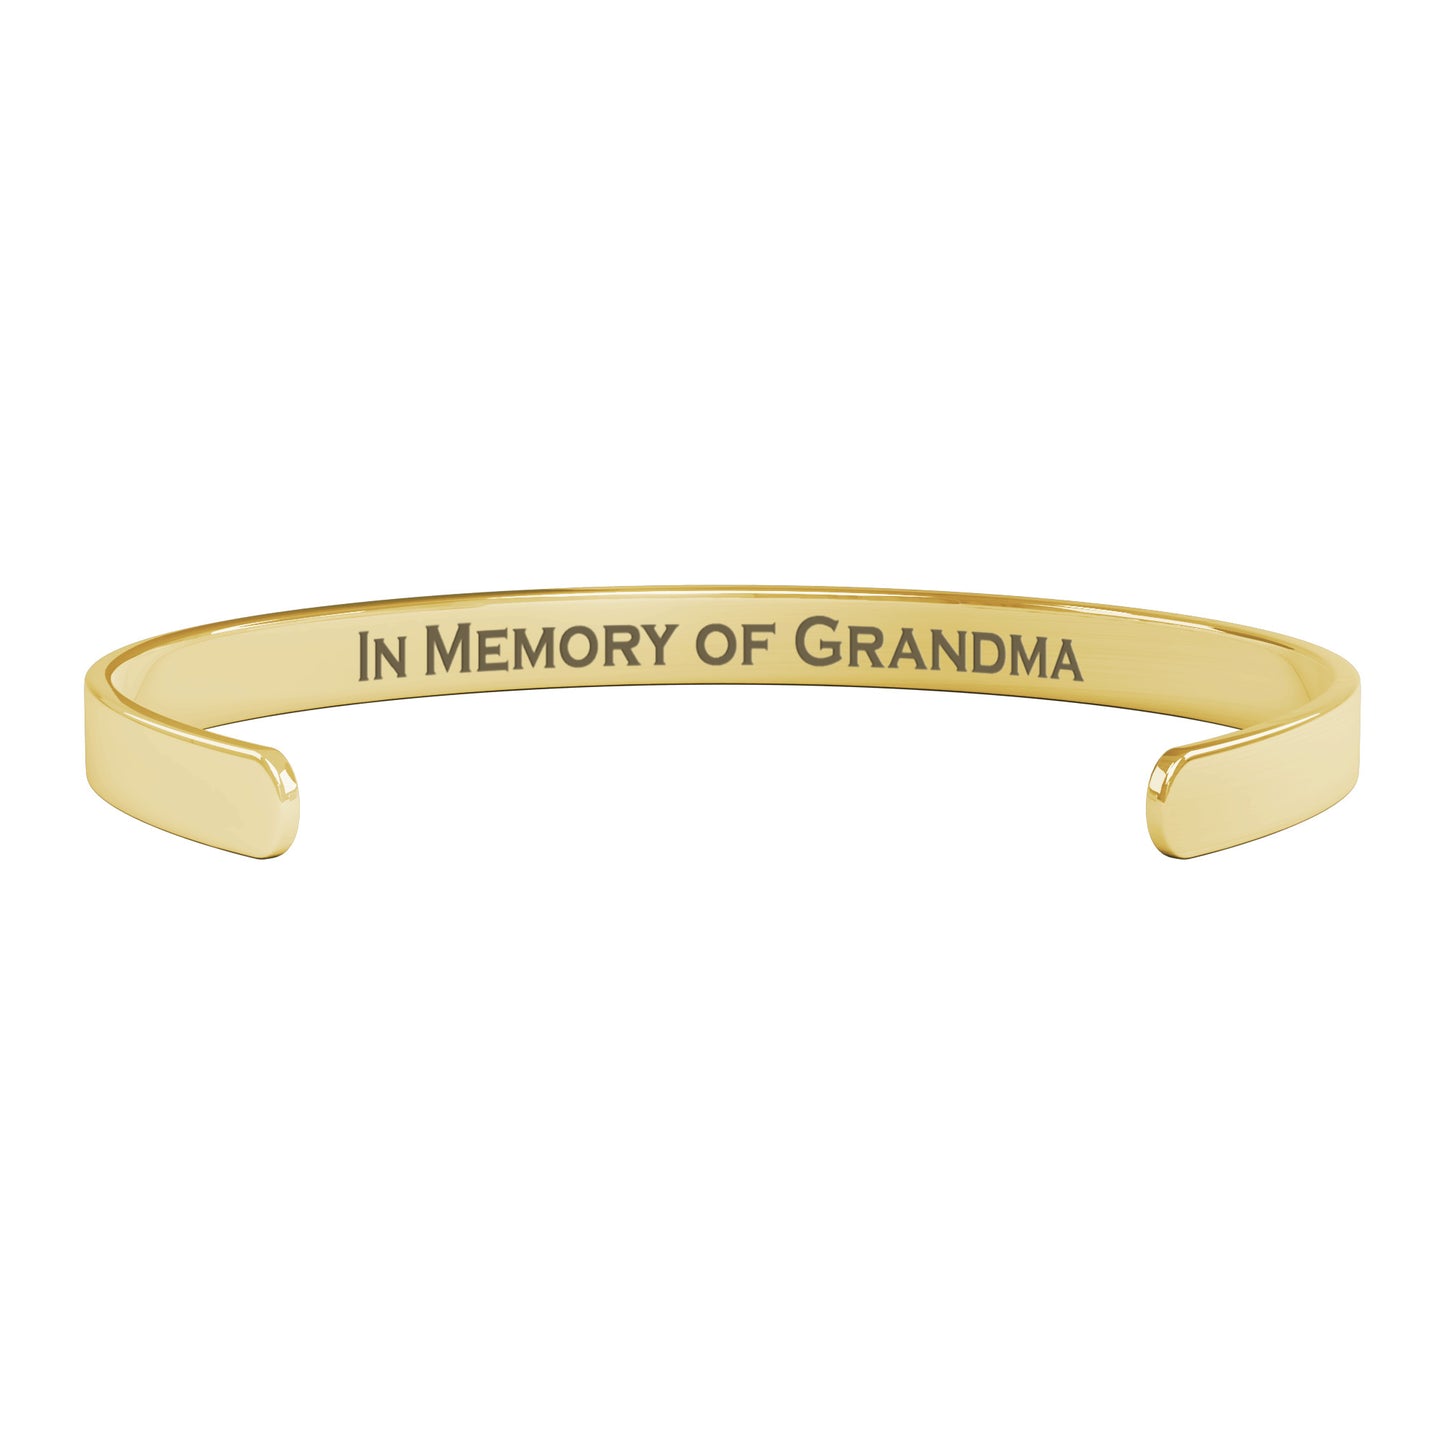 Personalized Alzheimer's Awareness Cuff Bracelet